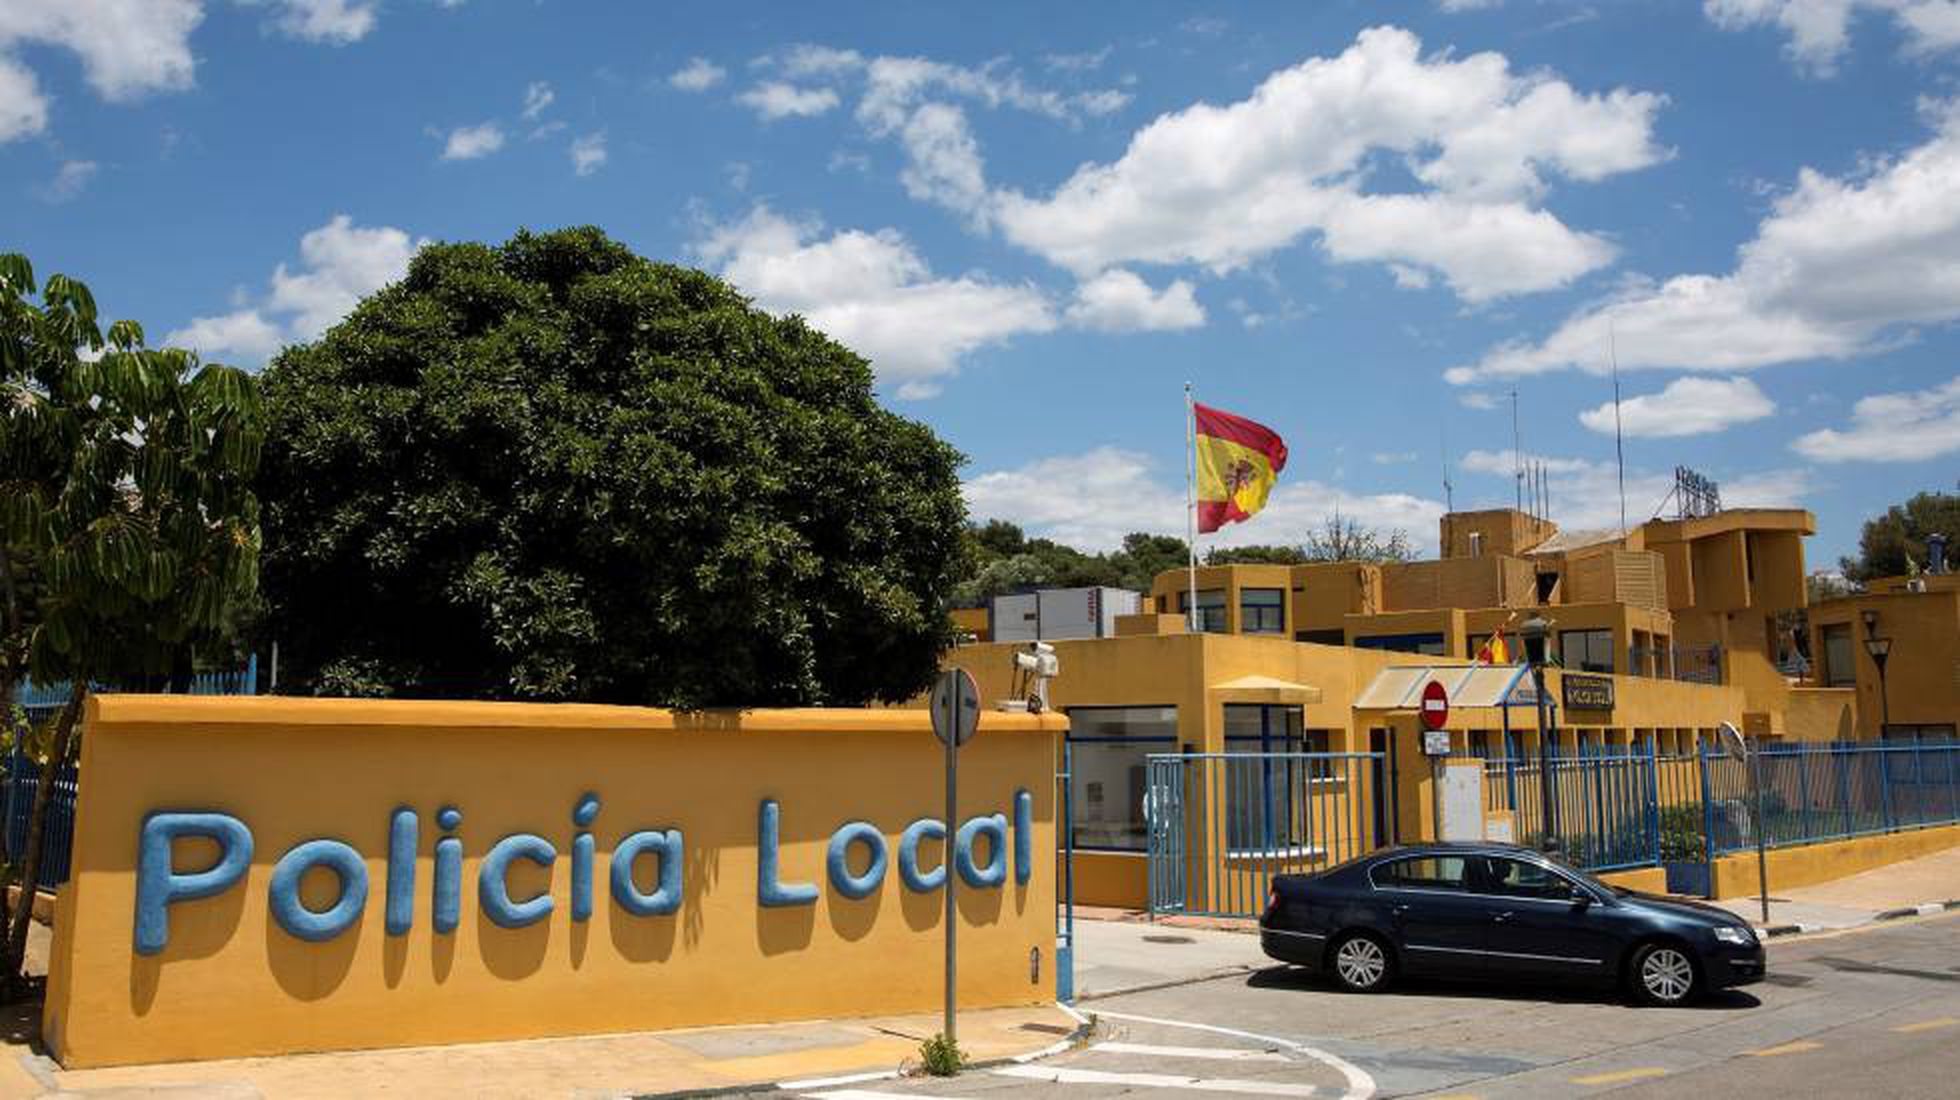 Policías españoles condenados por abuso sexual evitaron cárcel gracias a un acuerdo